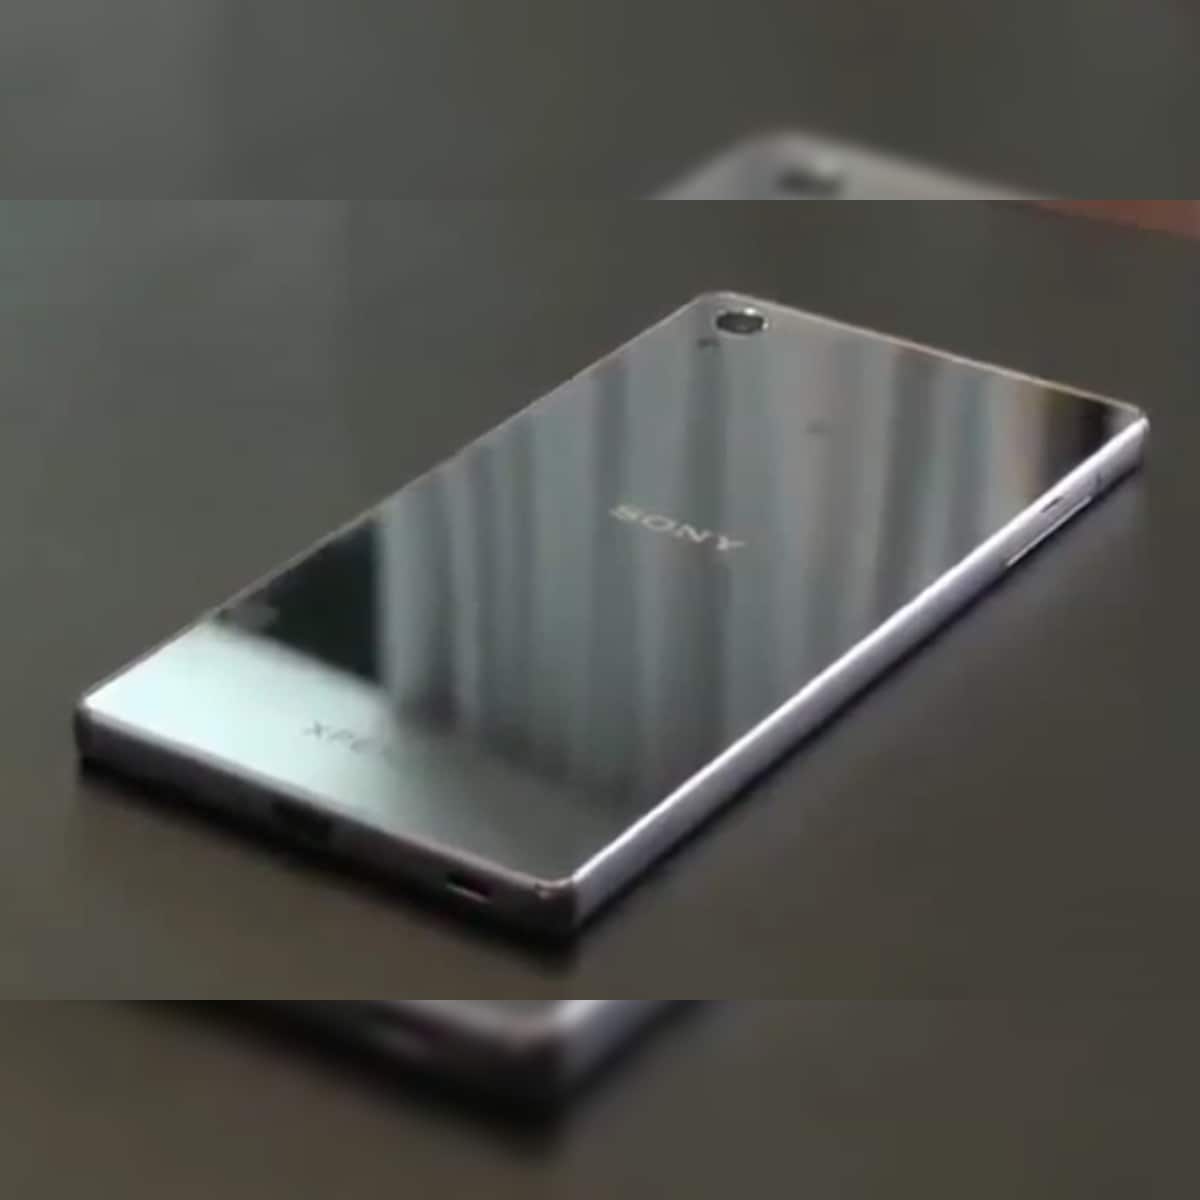 Leaked video reveals Sony Xperia Z5 Premium with camera, fingerprint sensor ahead